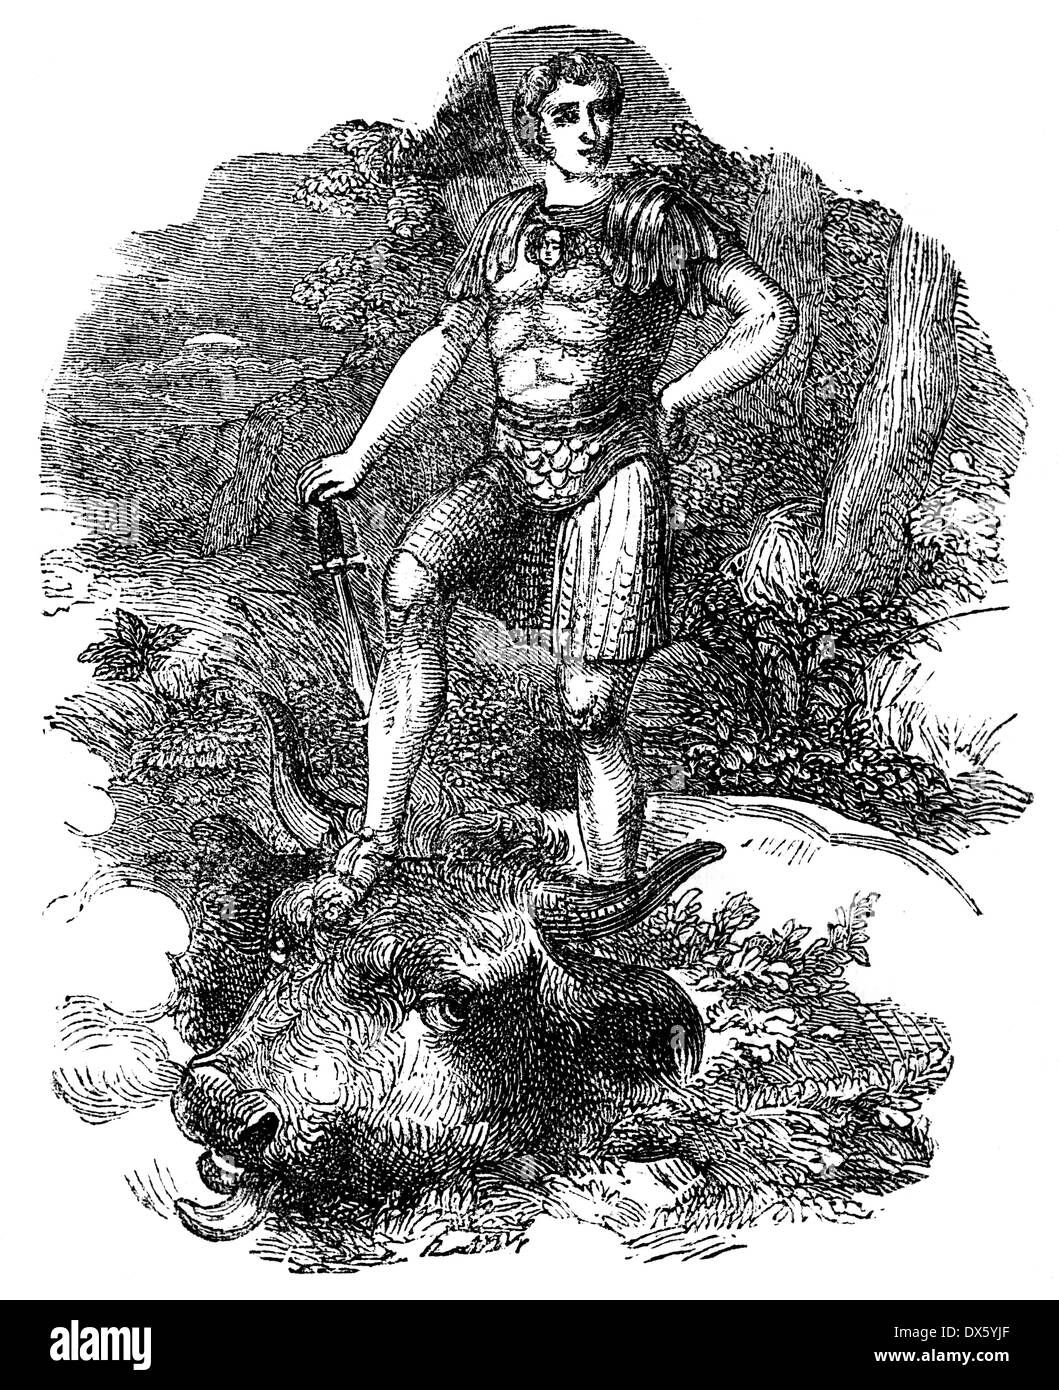 Theseus Slaying Minotaur, illustration from book dated 1878 Stock Photo